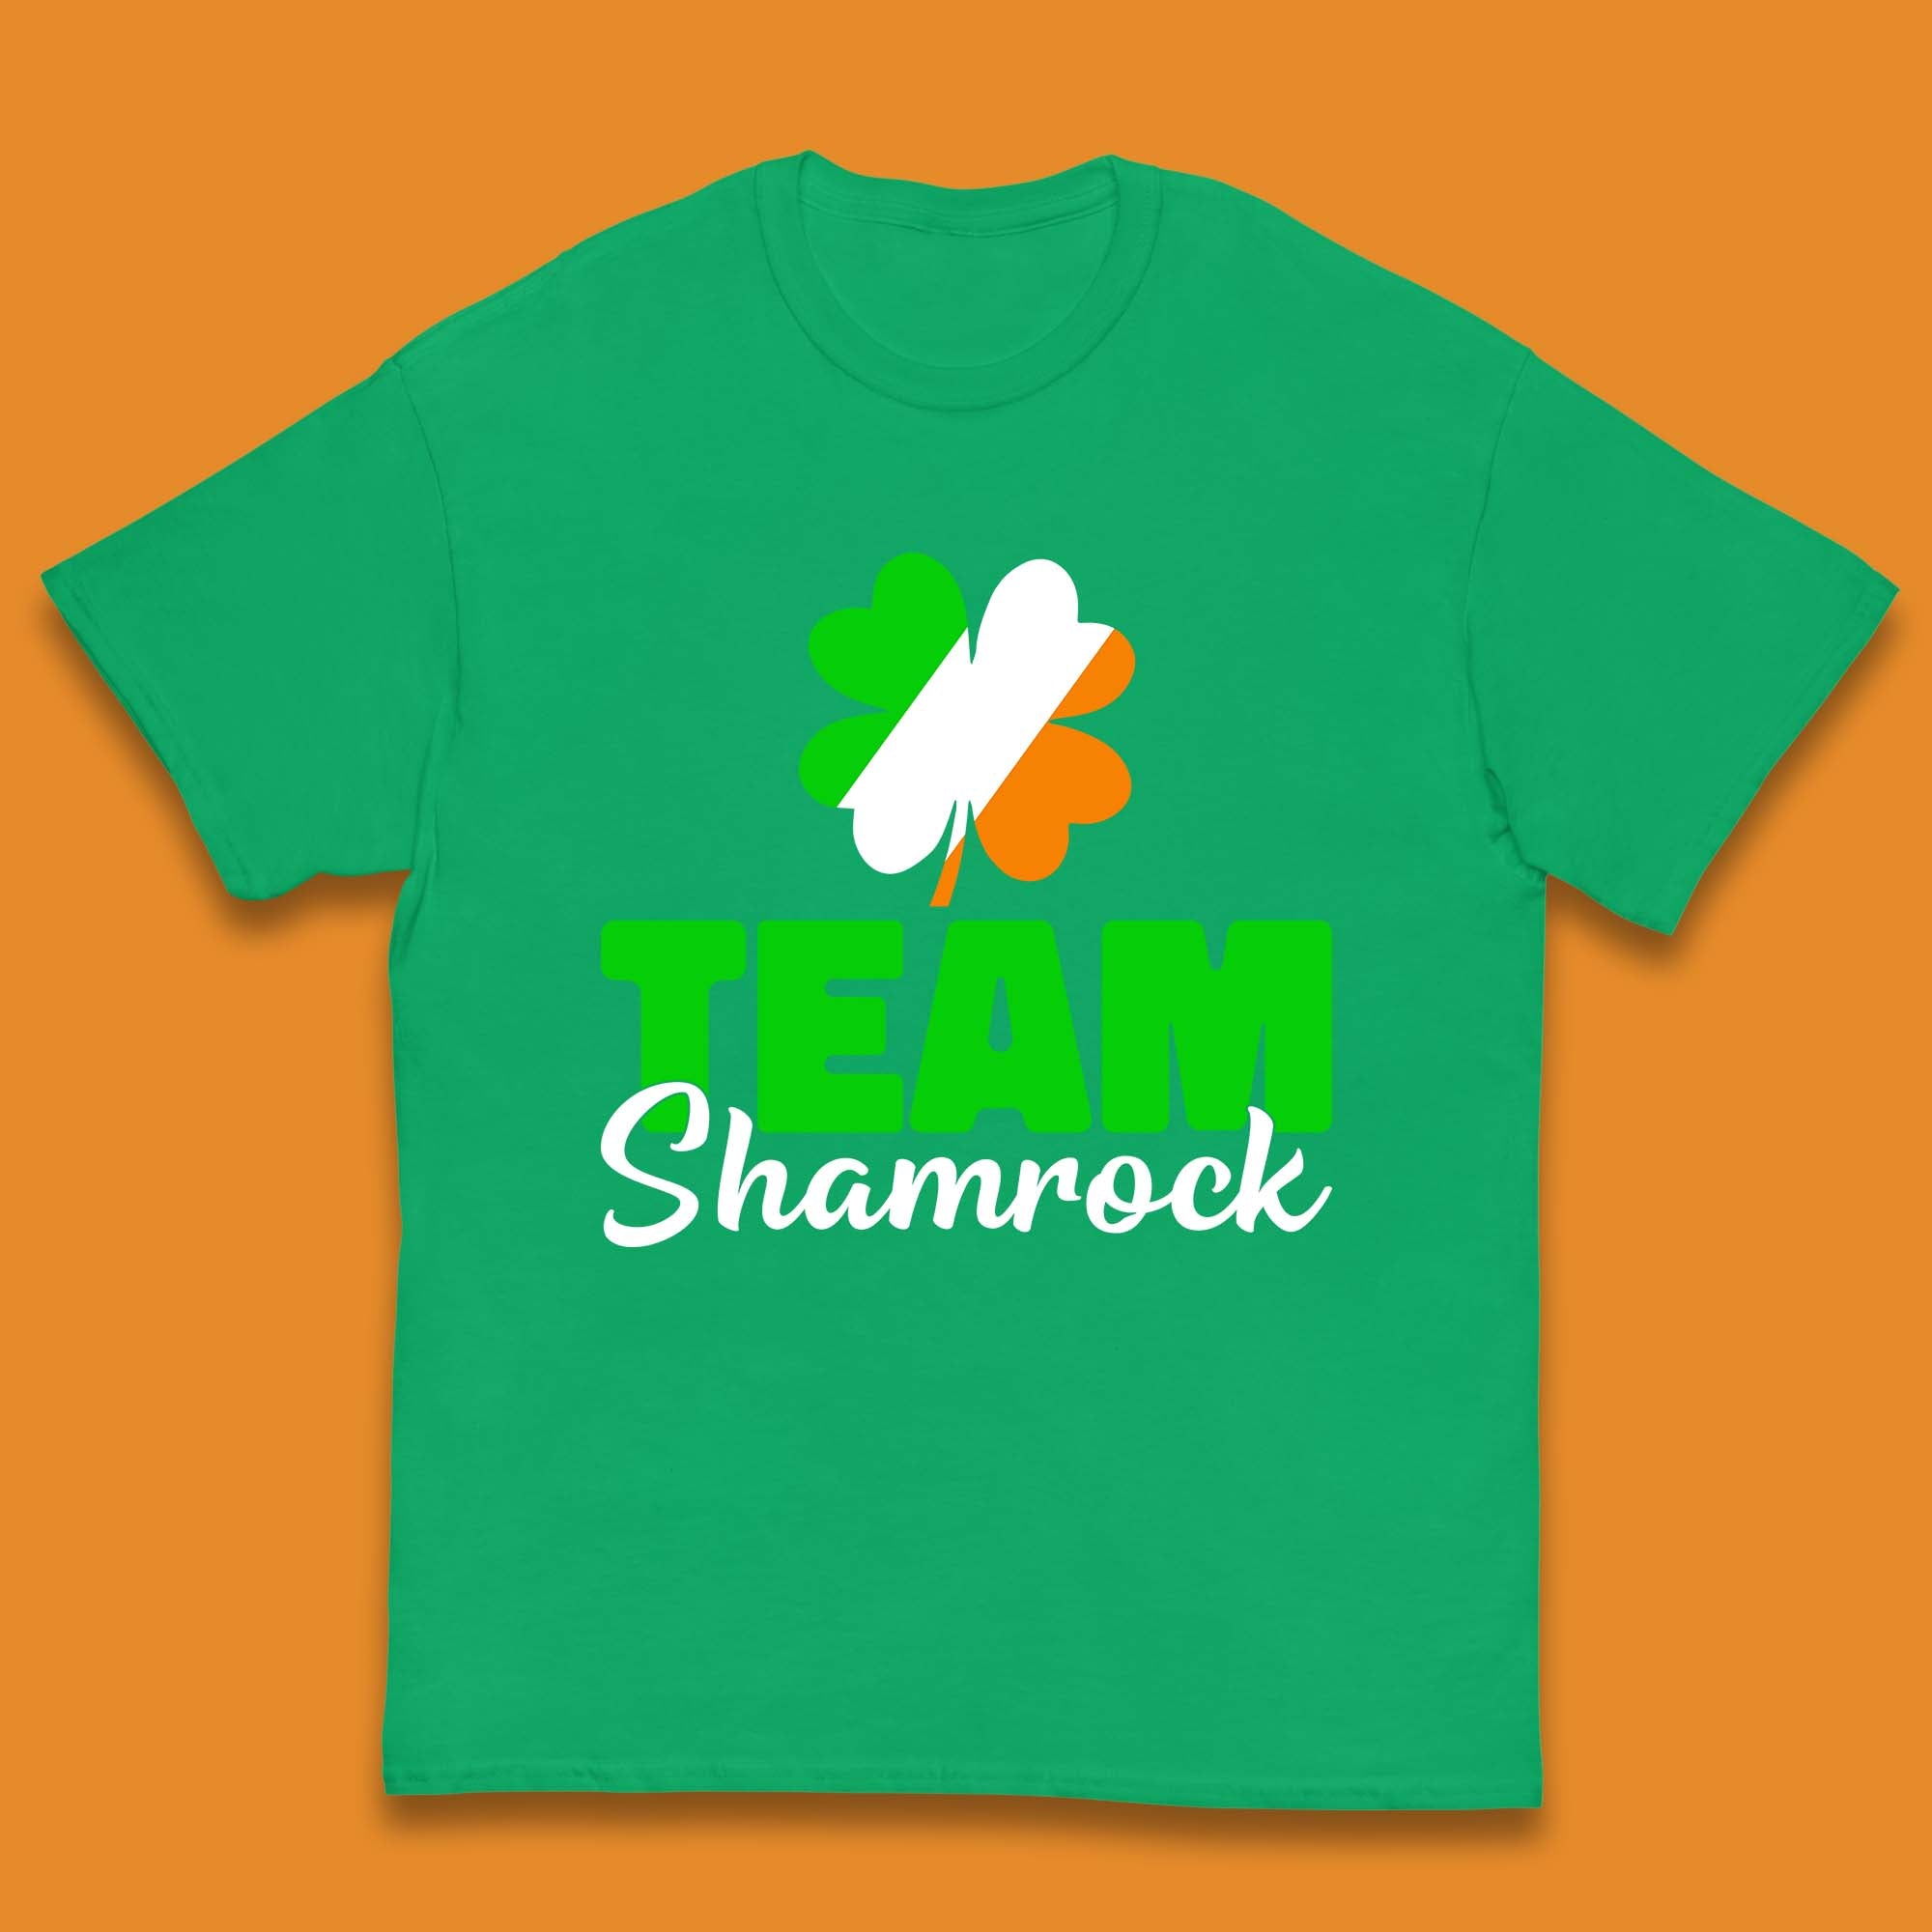 Team Shamrock Kids T-Shirt